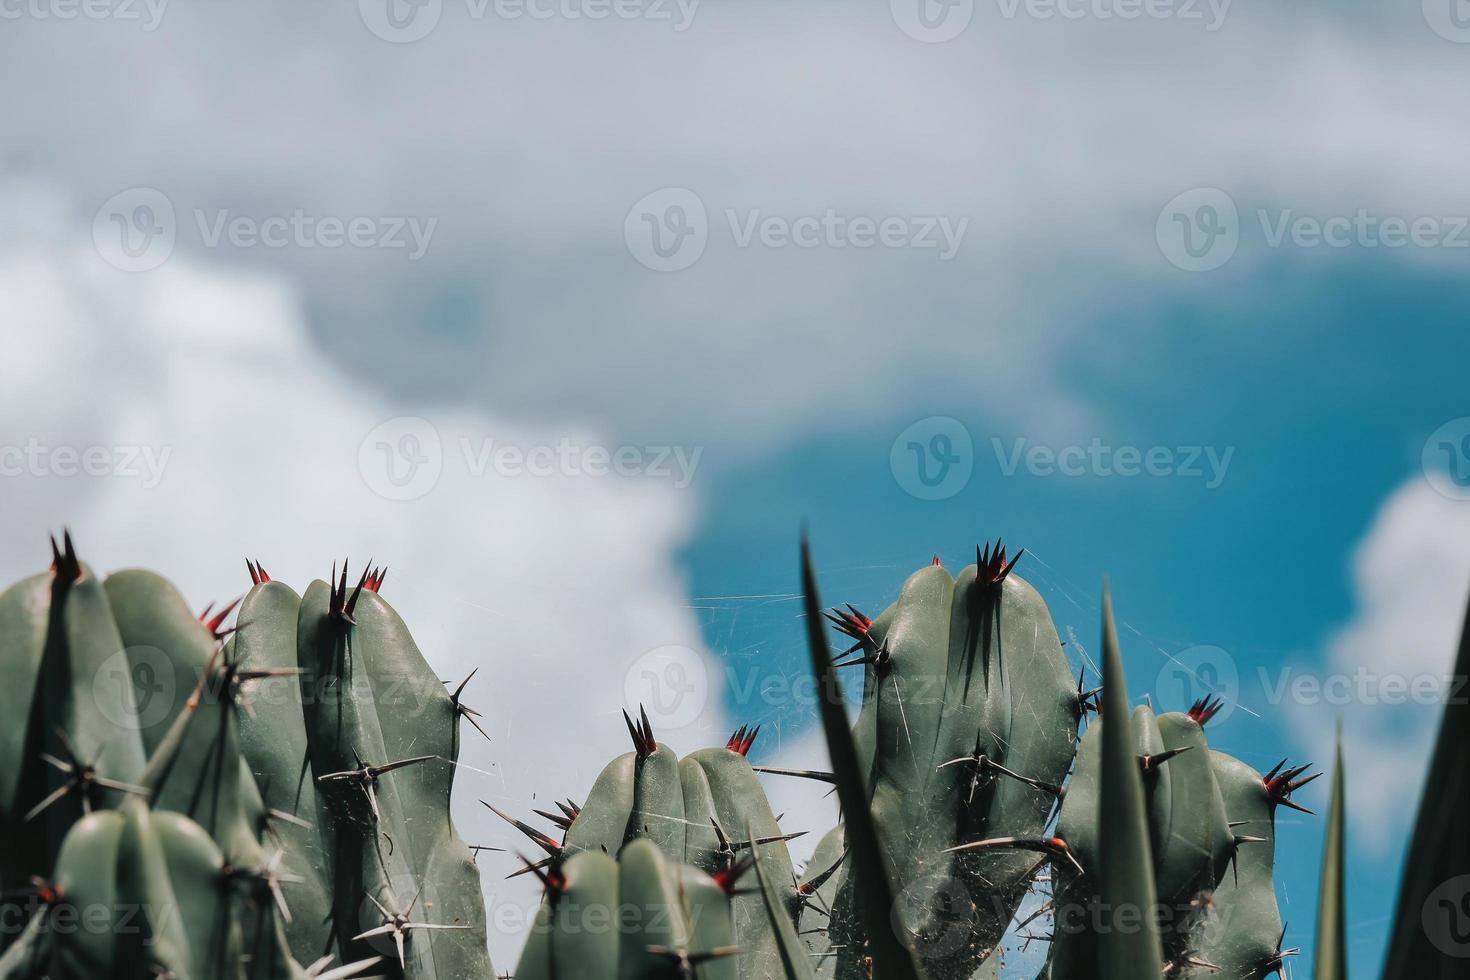 mexikansk garambullo kaktus bakgrund med copy på topp foto